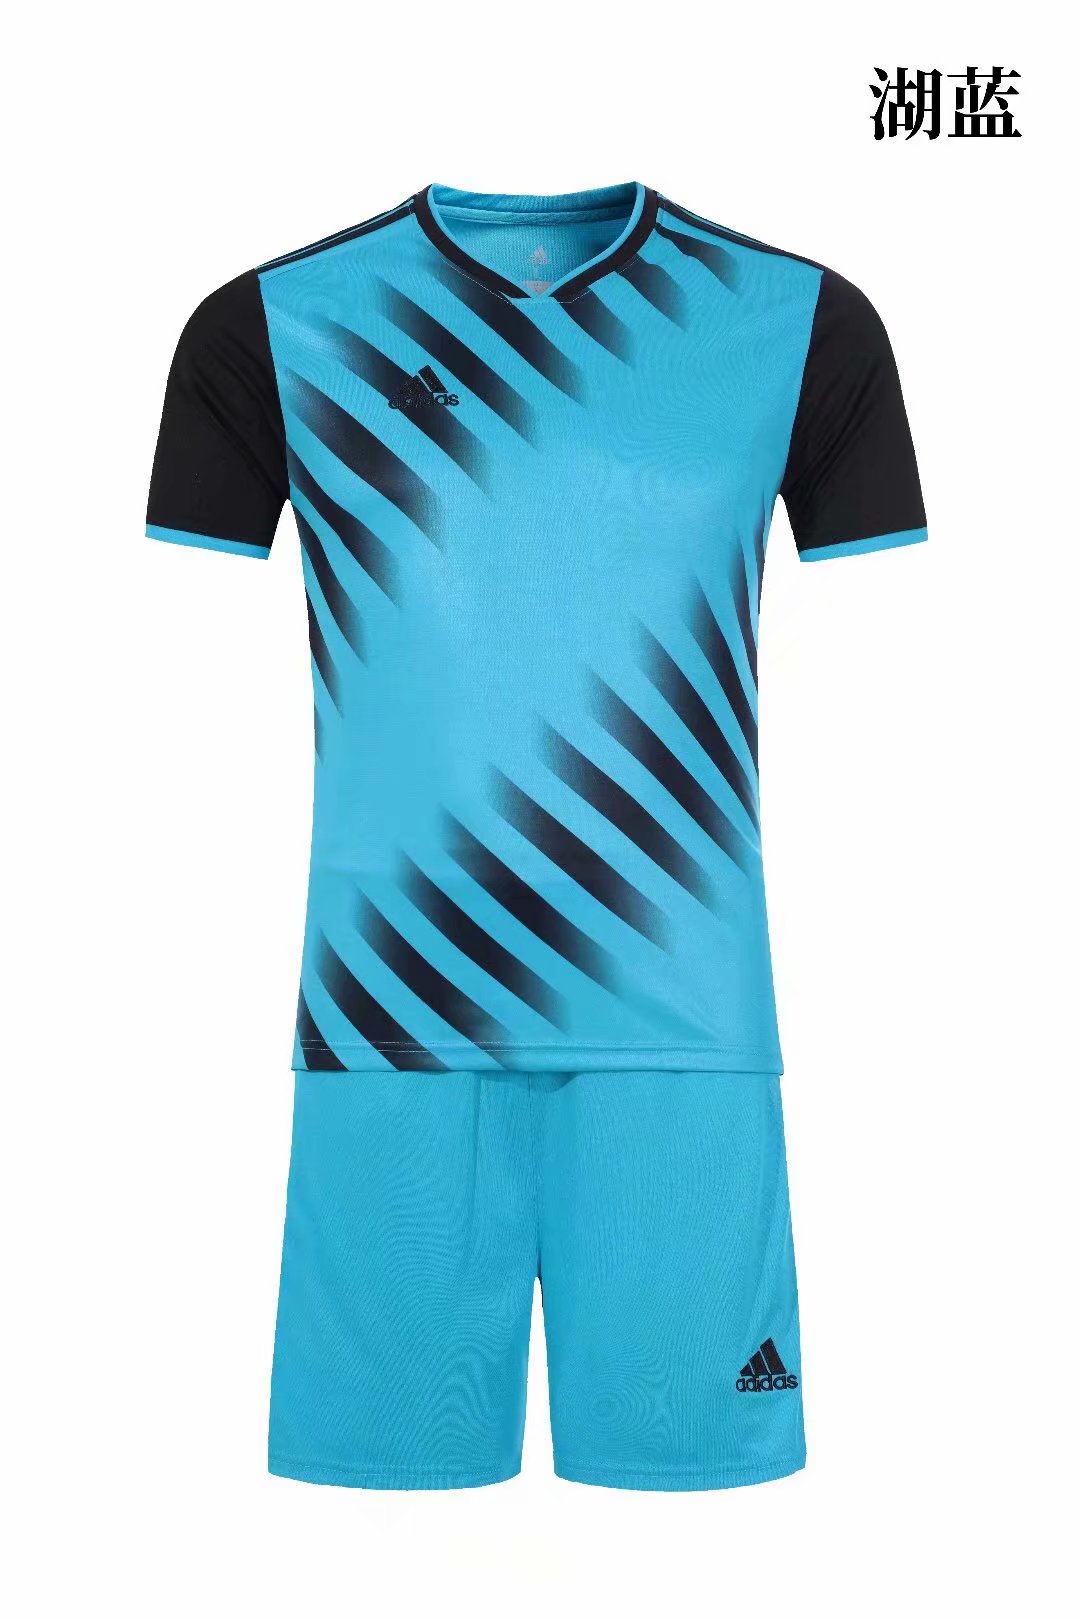 Adidas Soccer Team Uniforms 018